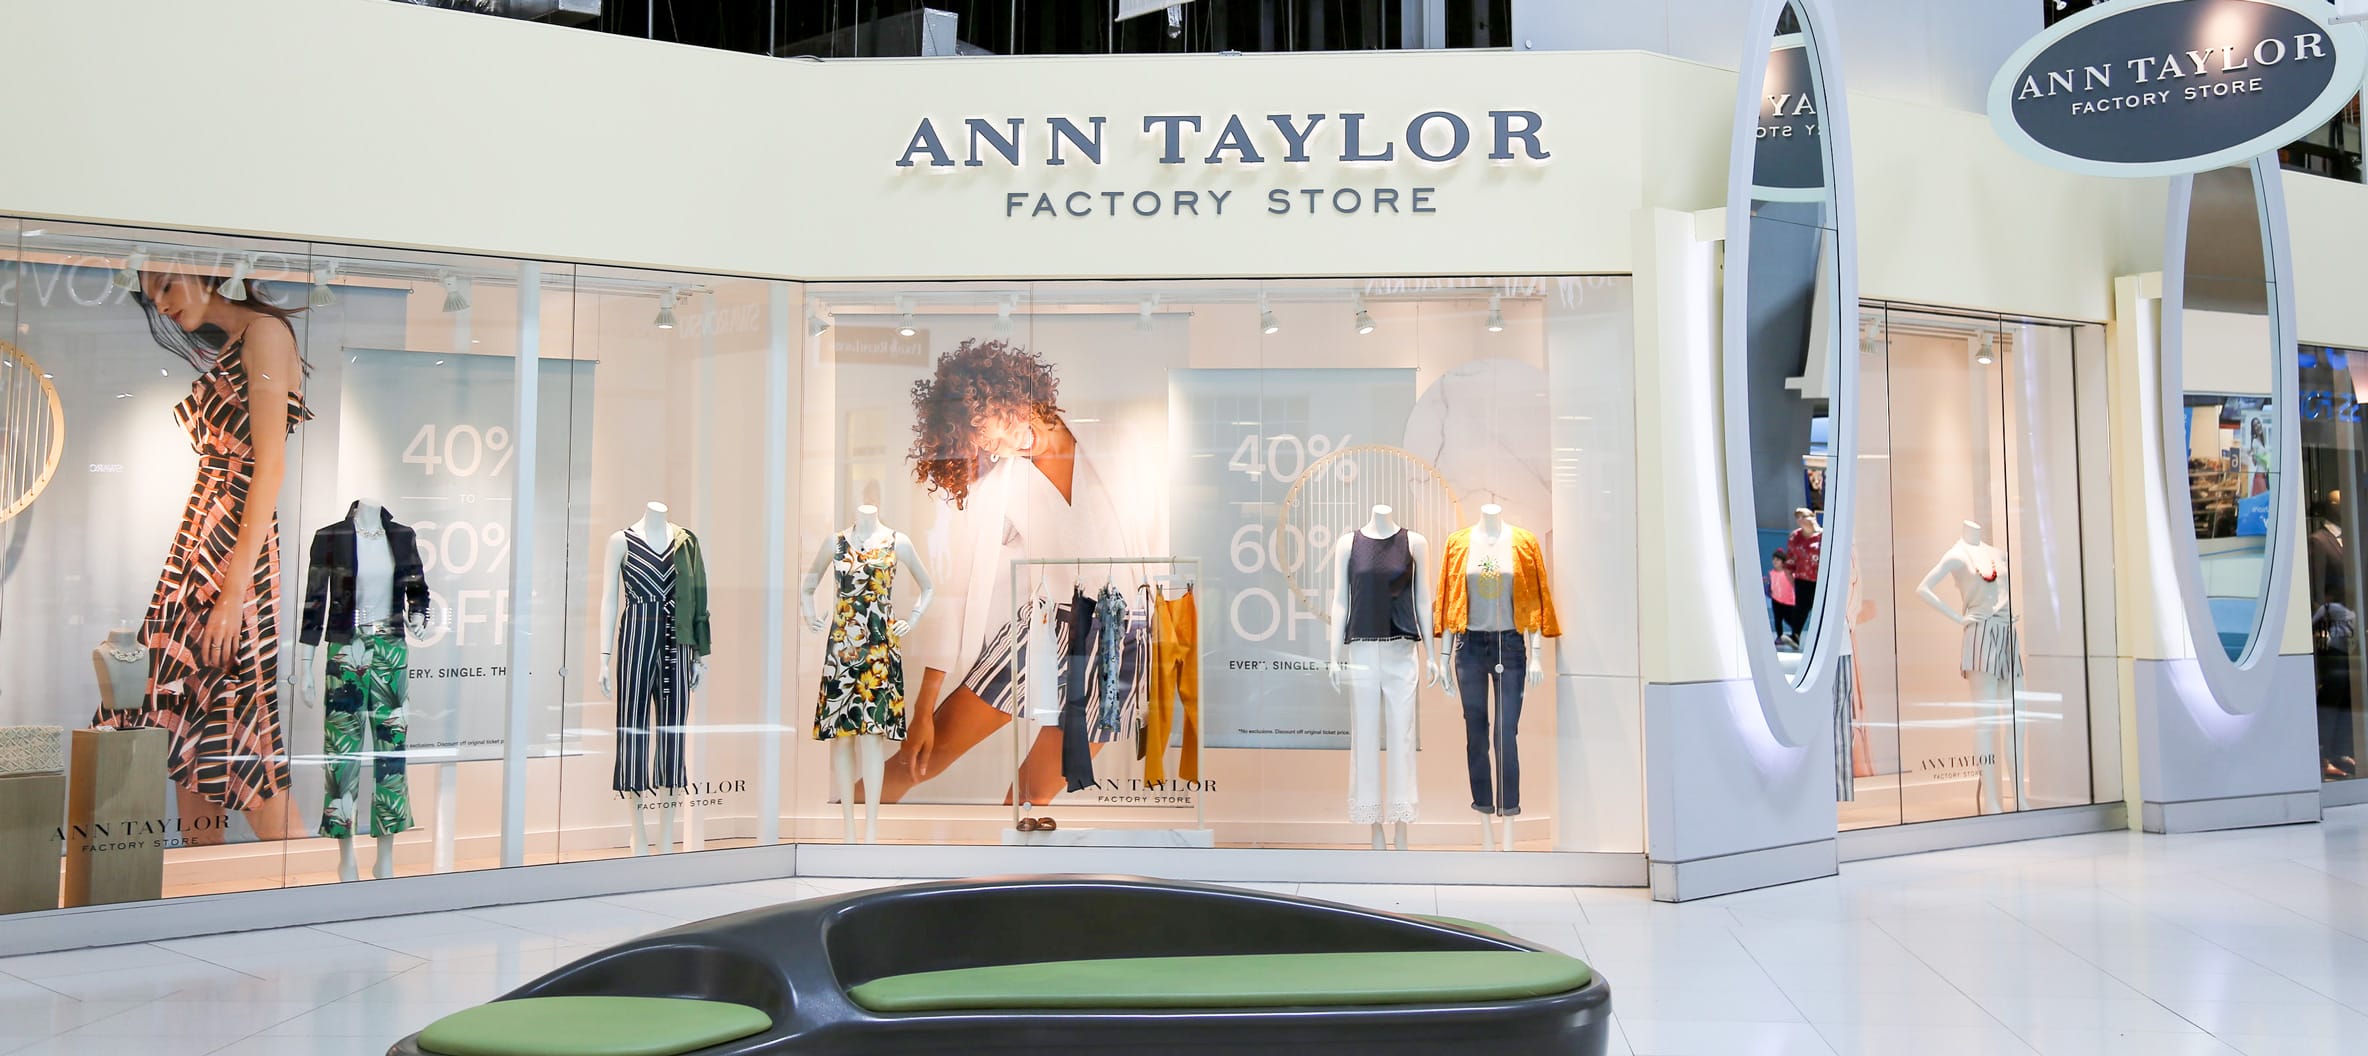 Ann Taylor Outlet Store Shop, 54% OFF ...